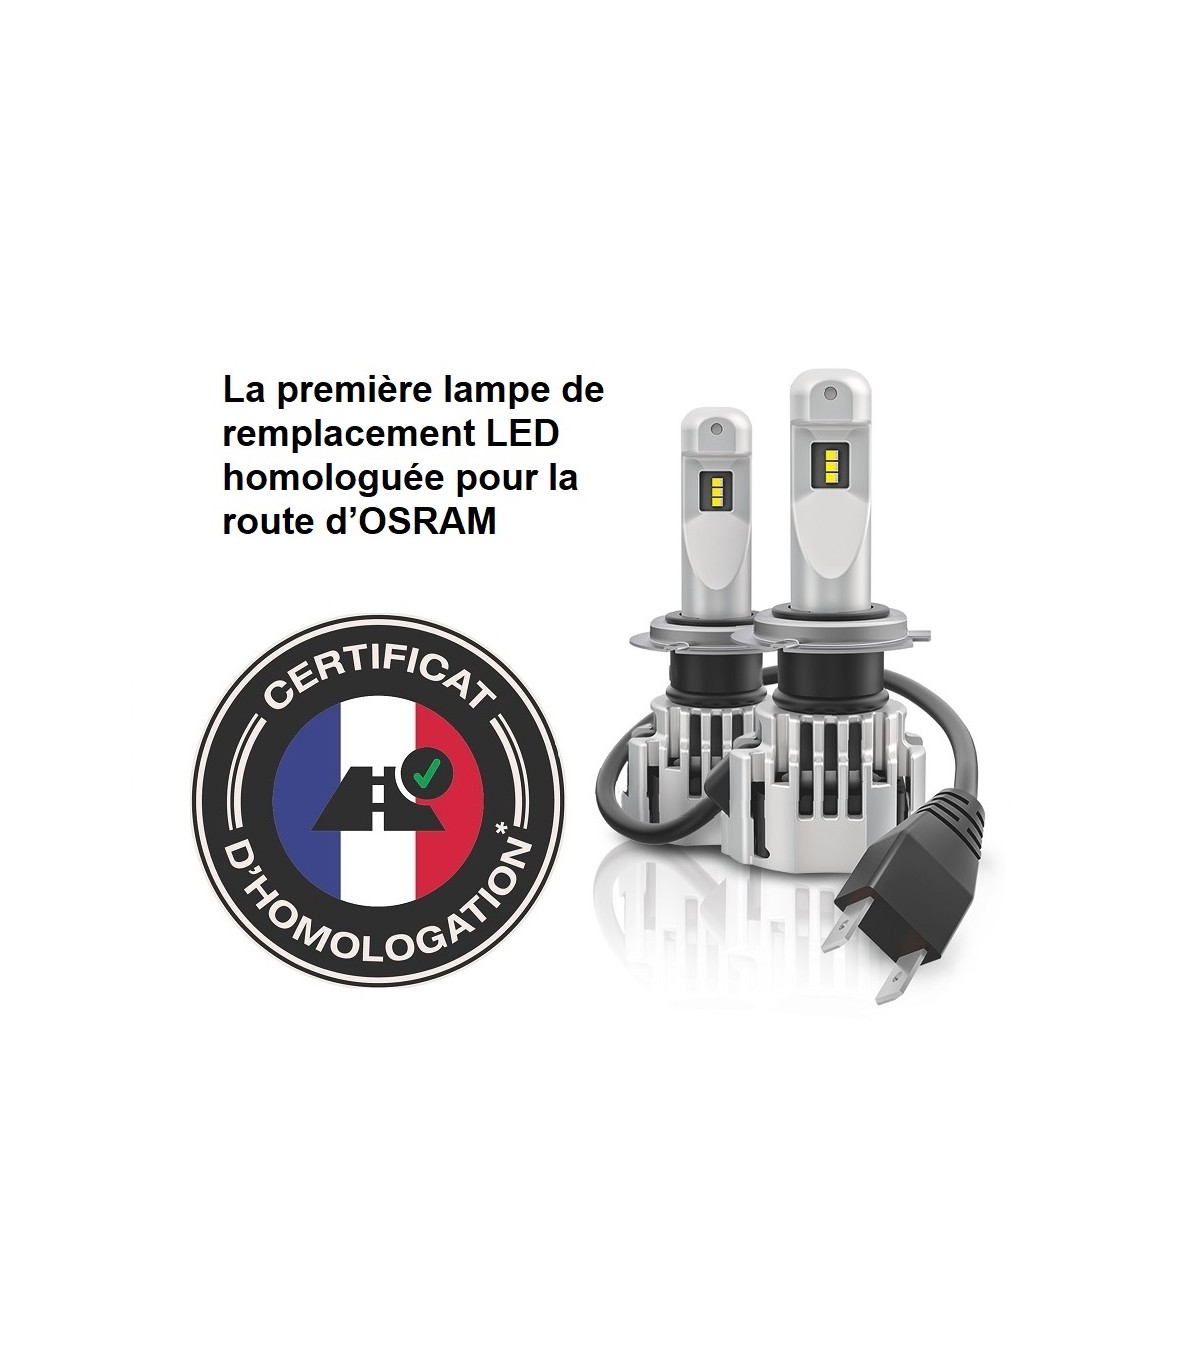 Ampoules LED Osram Night Breaker H4 / H7